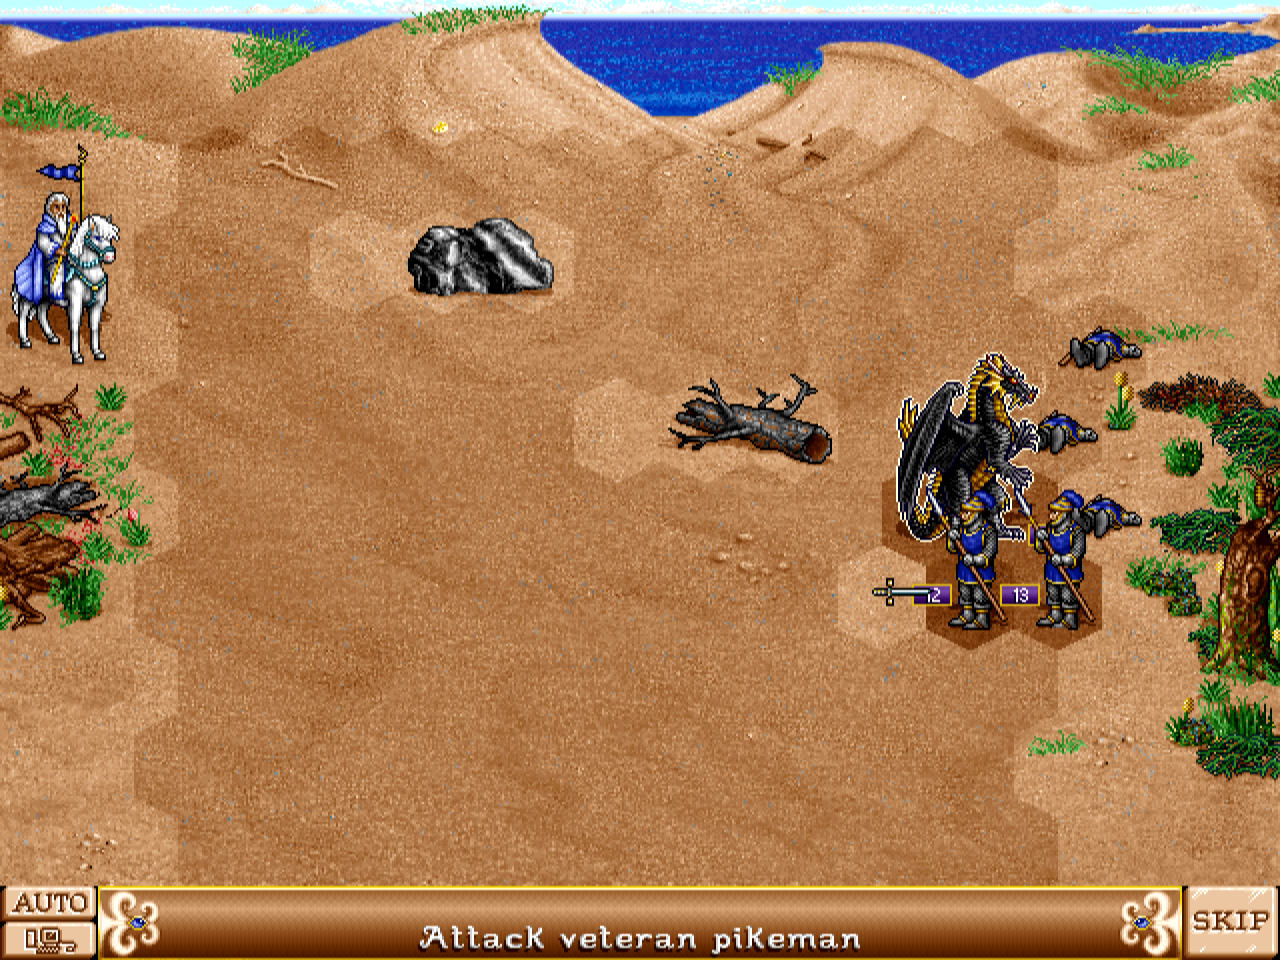 Dragons defeating spearmen in a desert